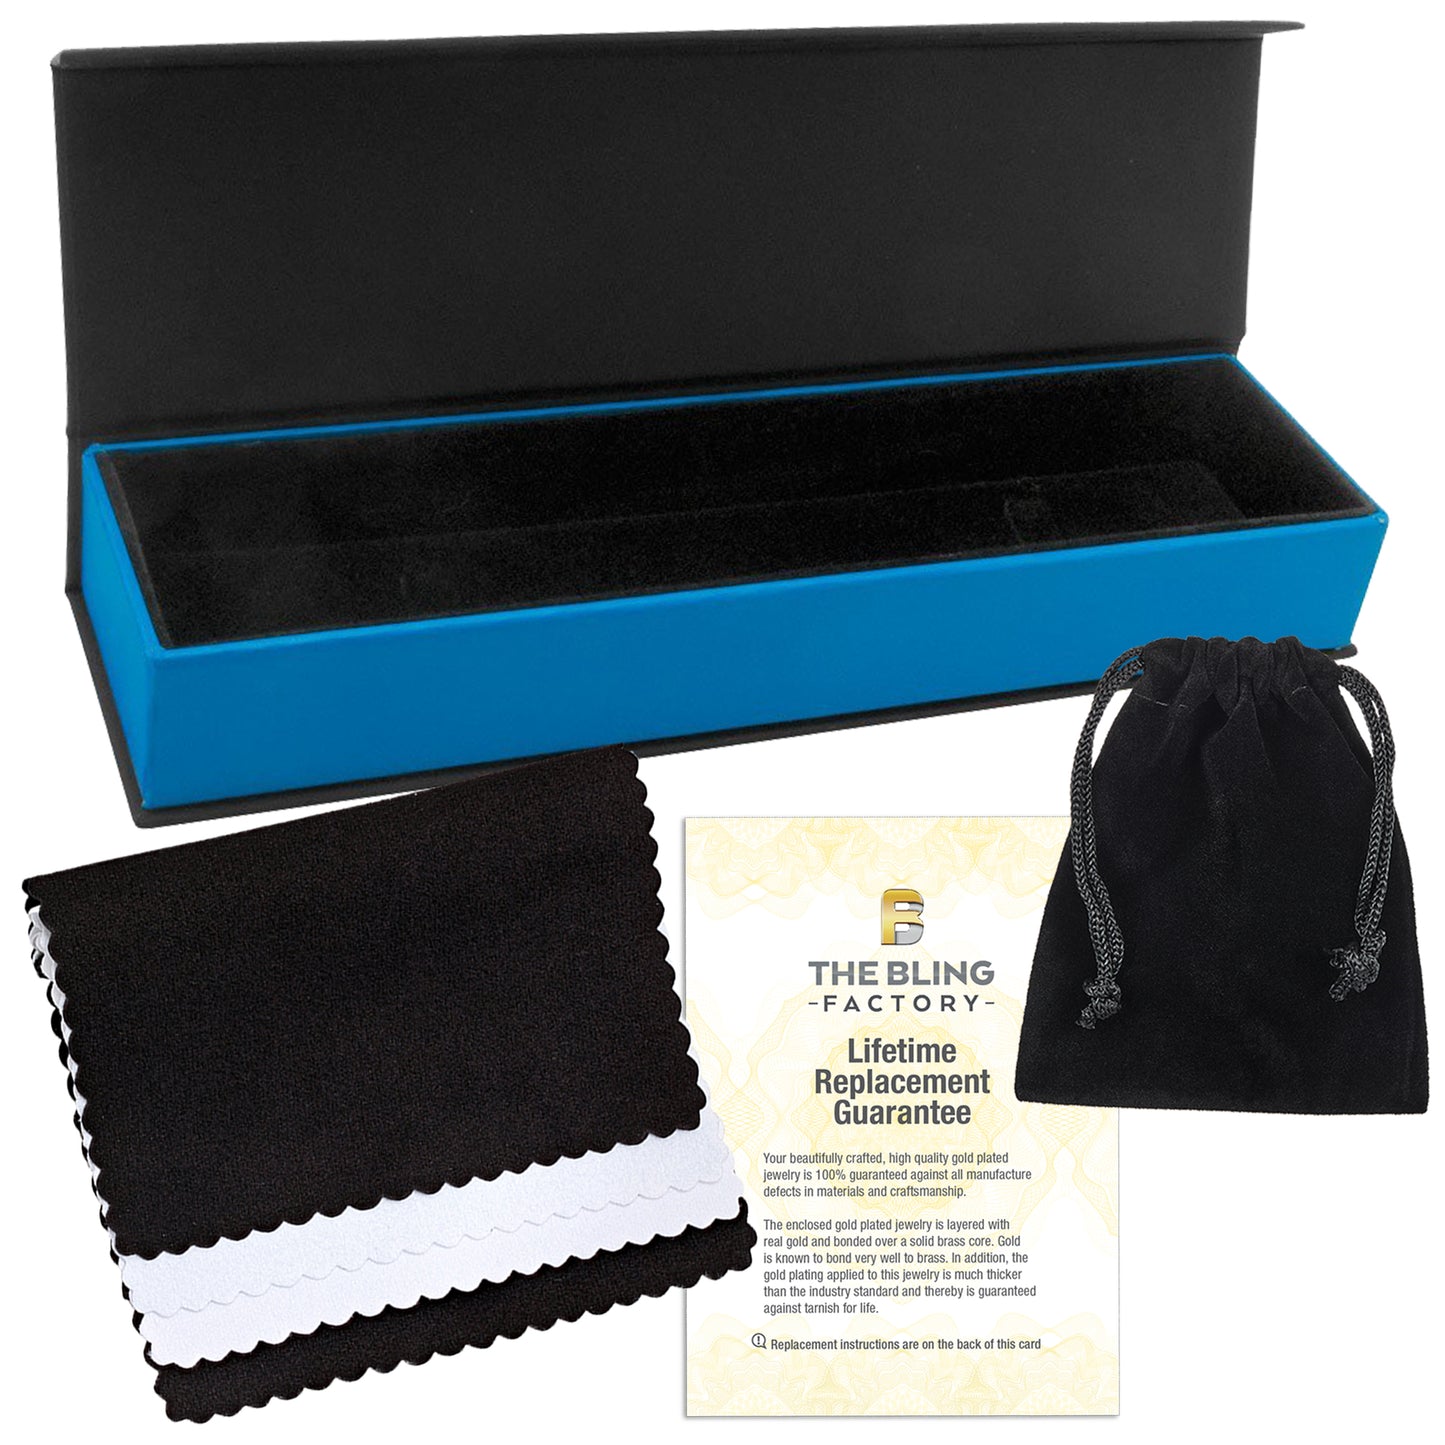 5.7mm Diamond-Cut 14k Yellow Gold Plated Flat Figaro Chain Bracelet + Gift Box (SKU: GL-015DB-BX)